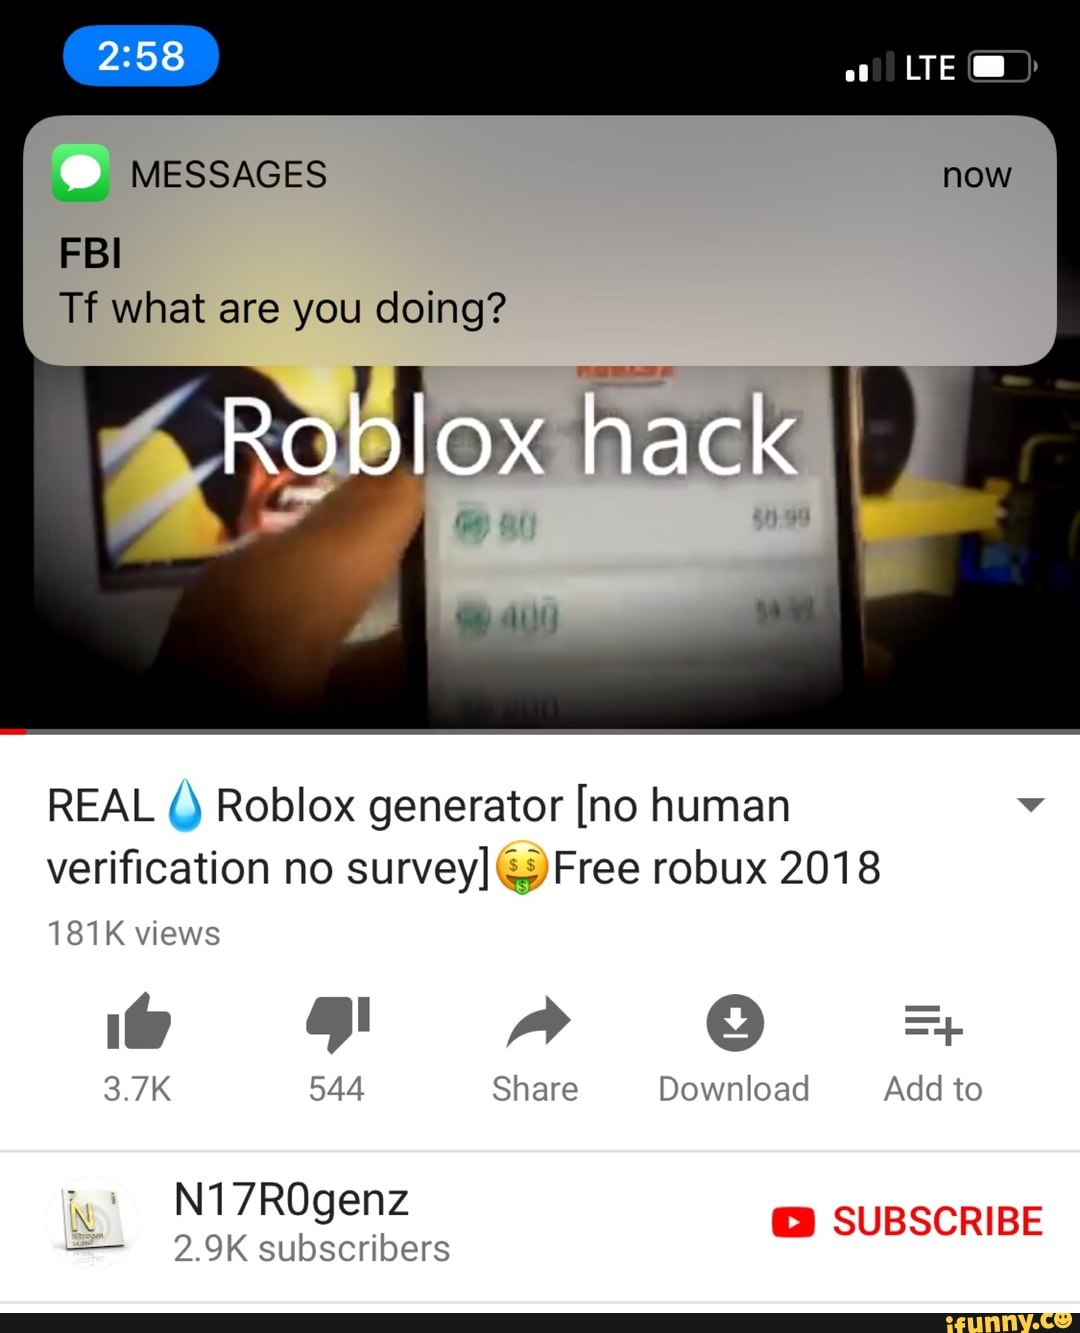 Real Roblox Generator No Human Verification Survey Free Robux 2018 Ifunny - roblox hack no human verification or survey tumblr